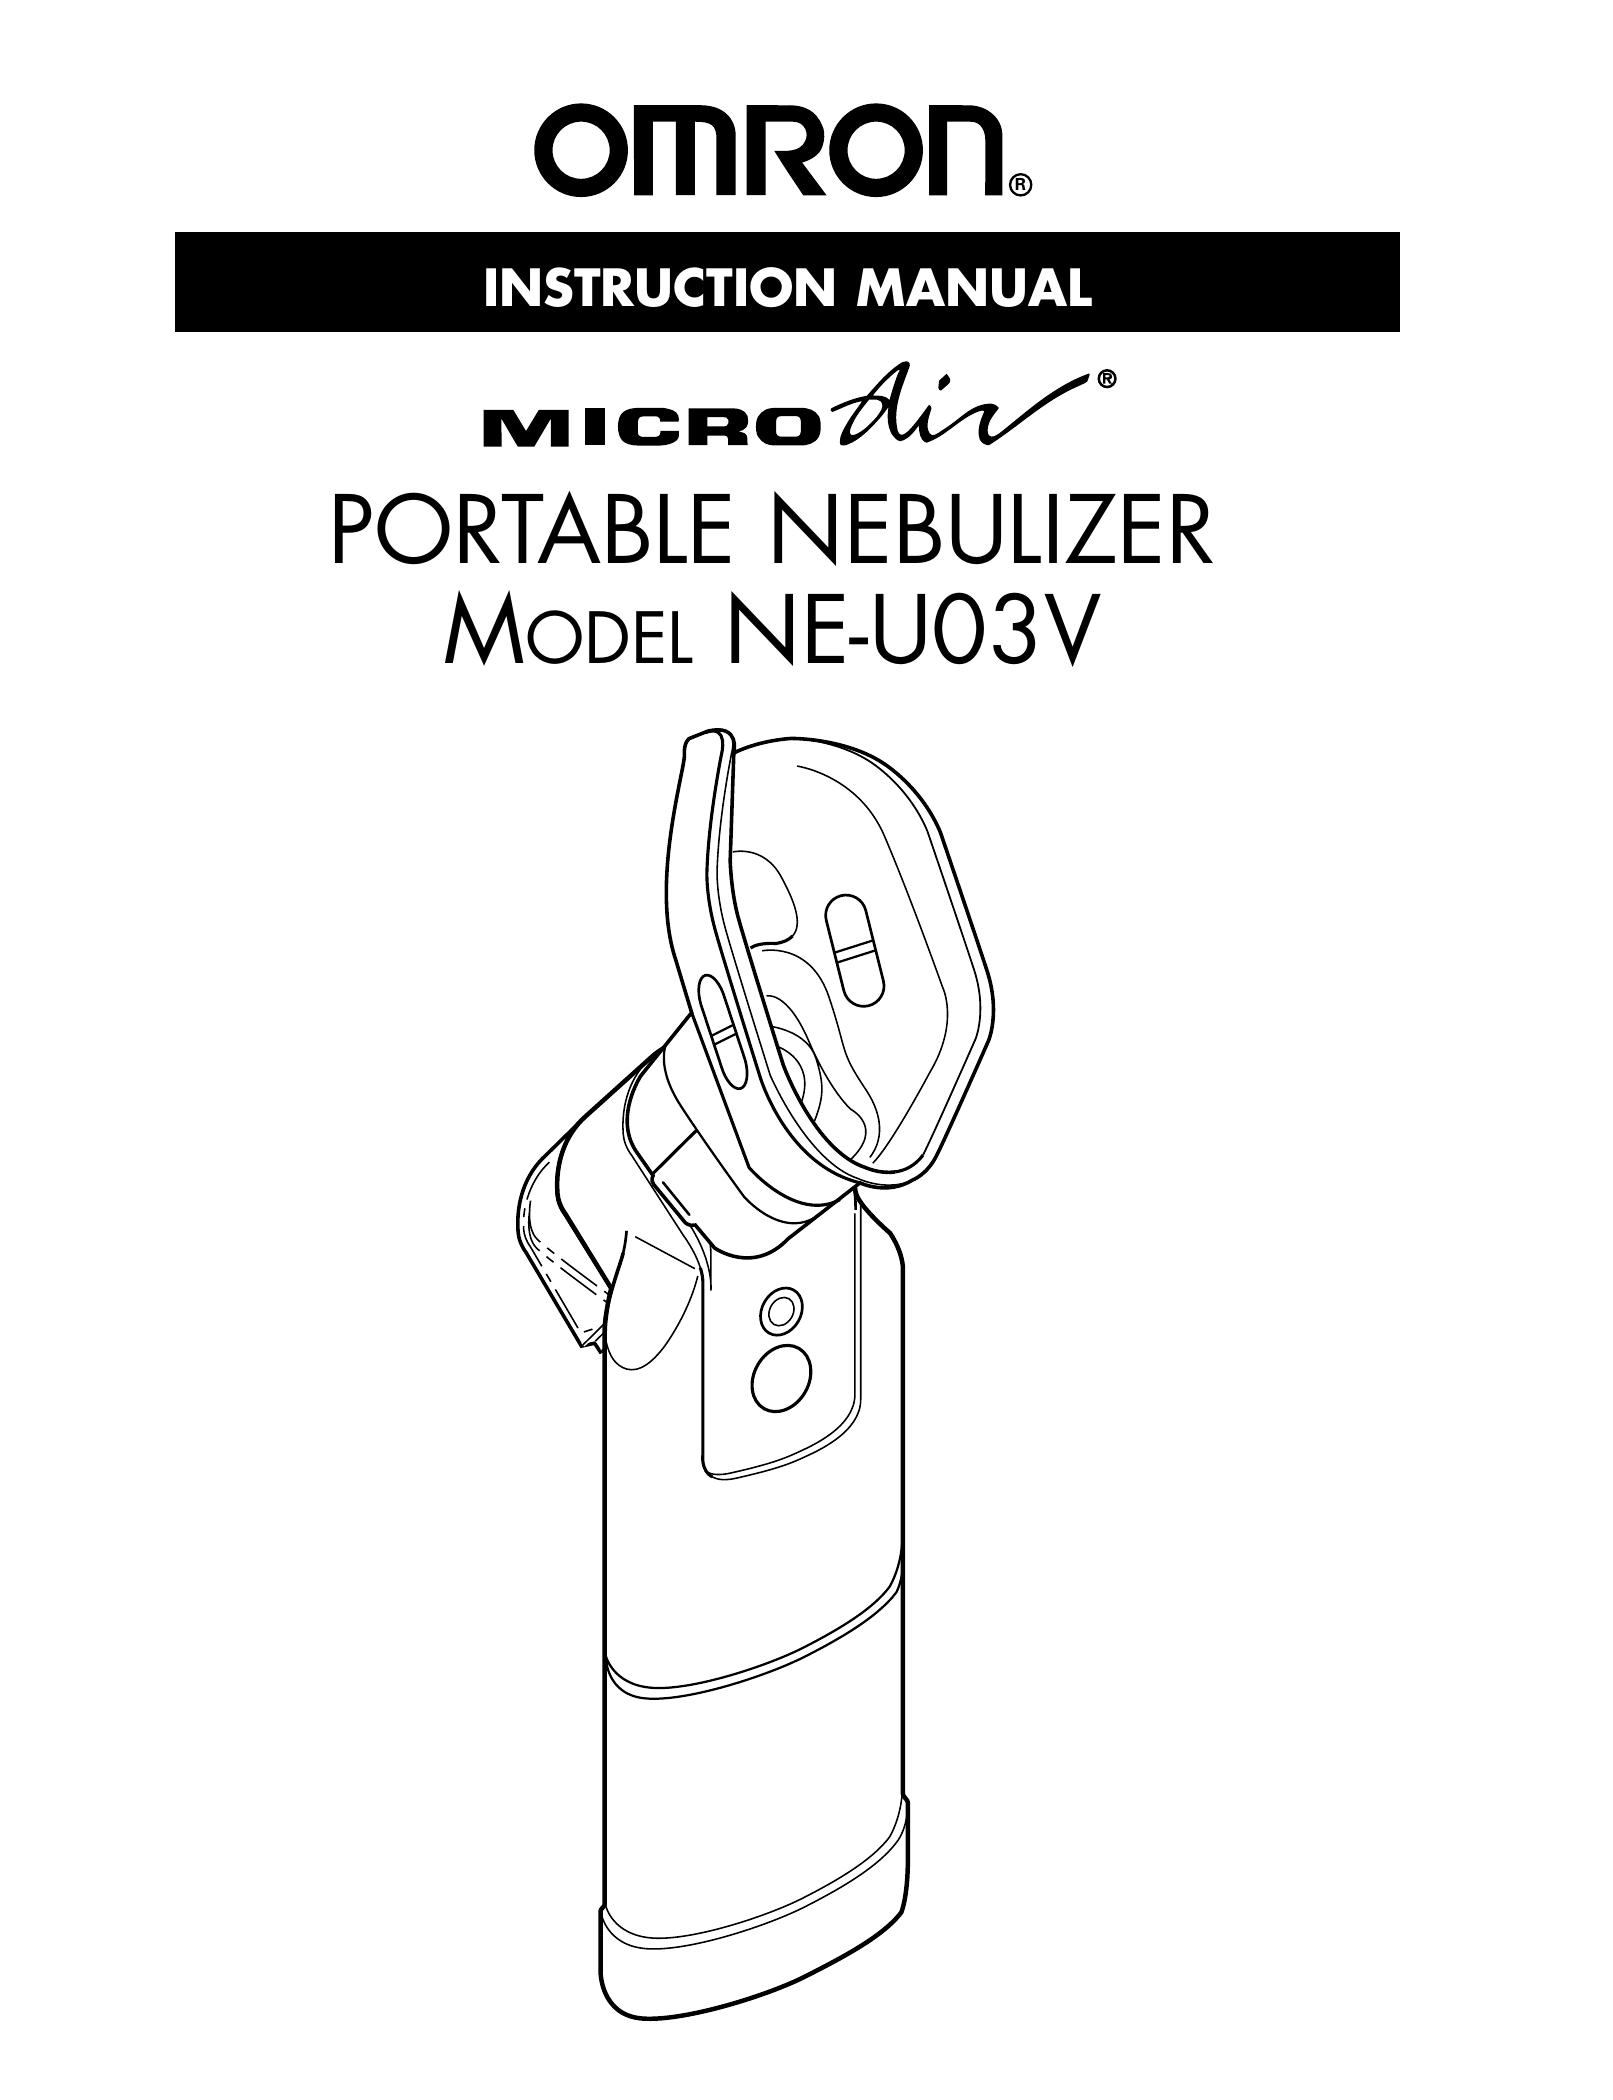 Omron NE-U03V Nebulizer User Manual